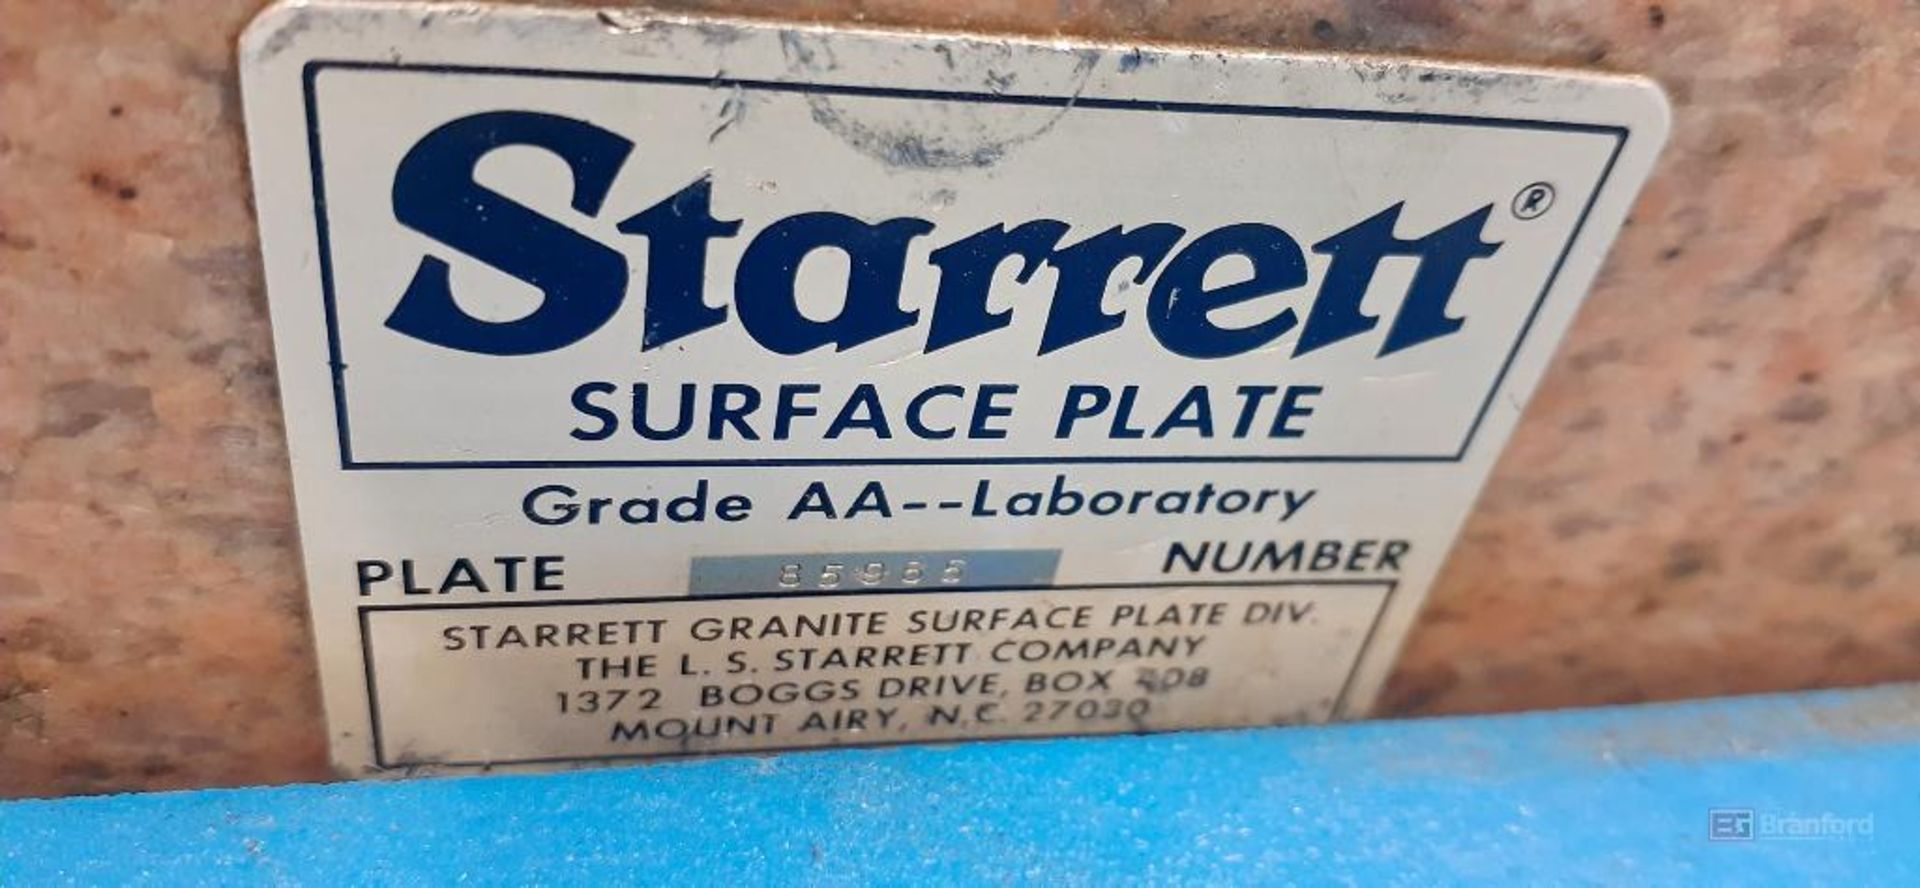 Starrett Granite Surface Plate - Image 3 of 4